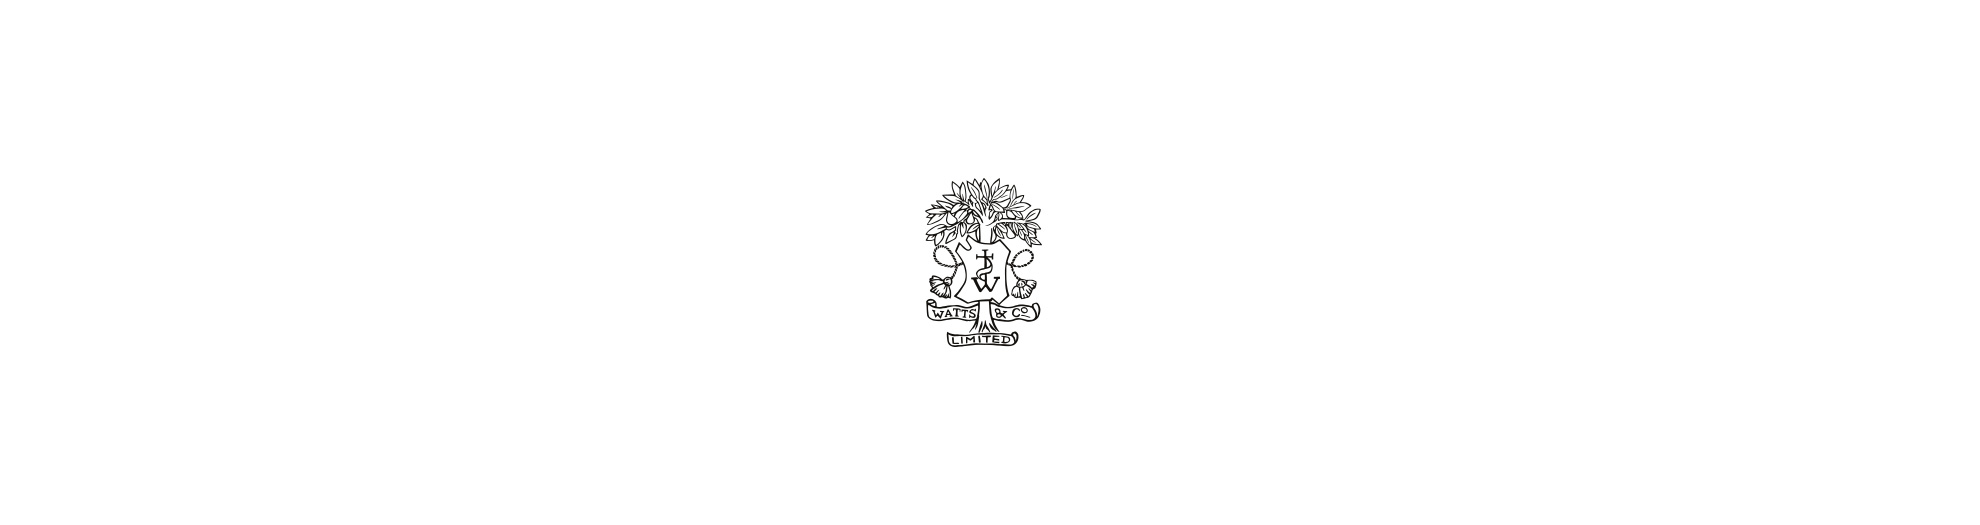 Watts 1874 Logo 1